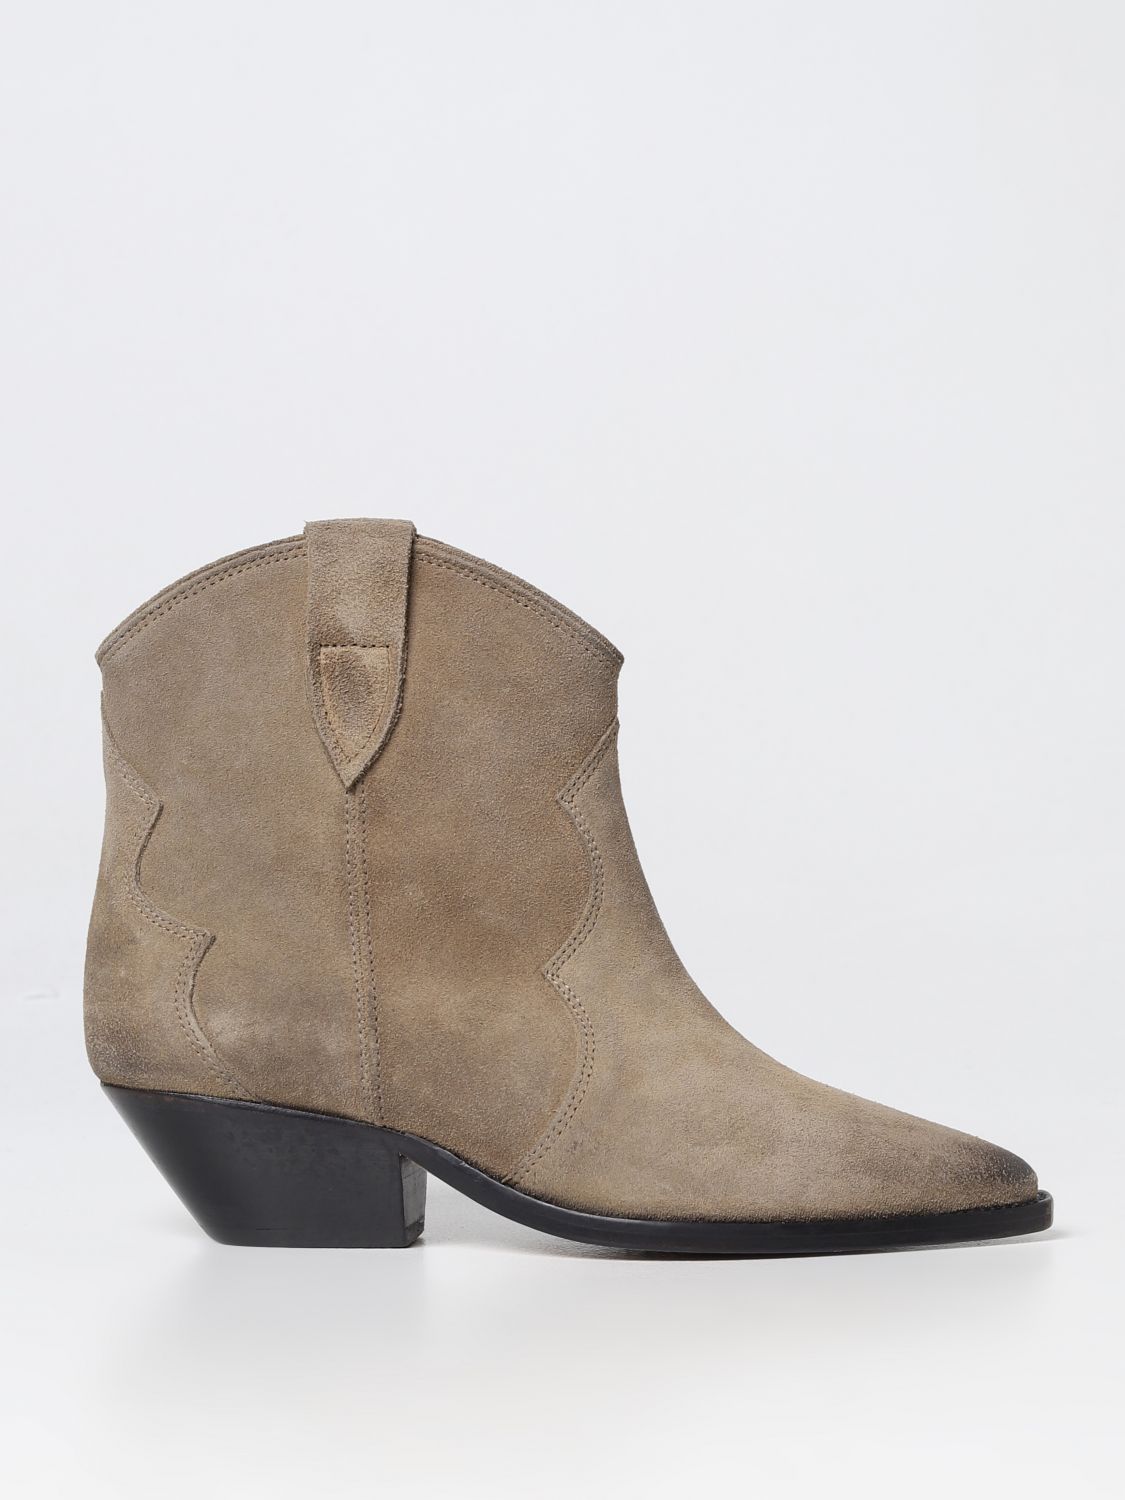 ISABEL MARANT ETOILE: boots for woman - Dove Grey | Isabel Marant ...